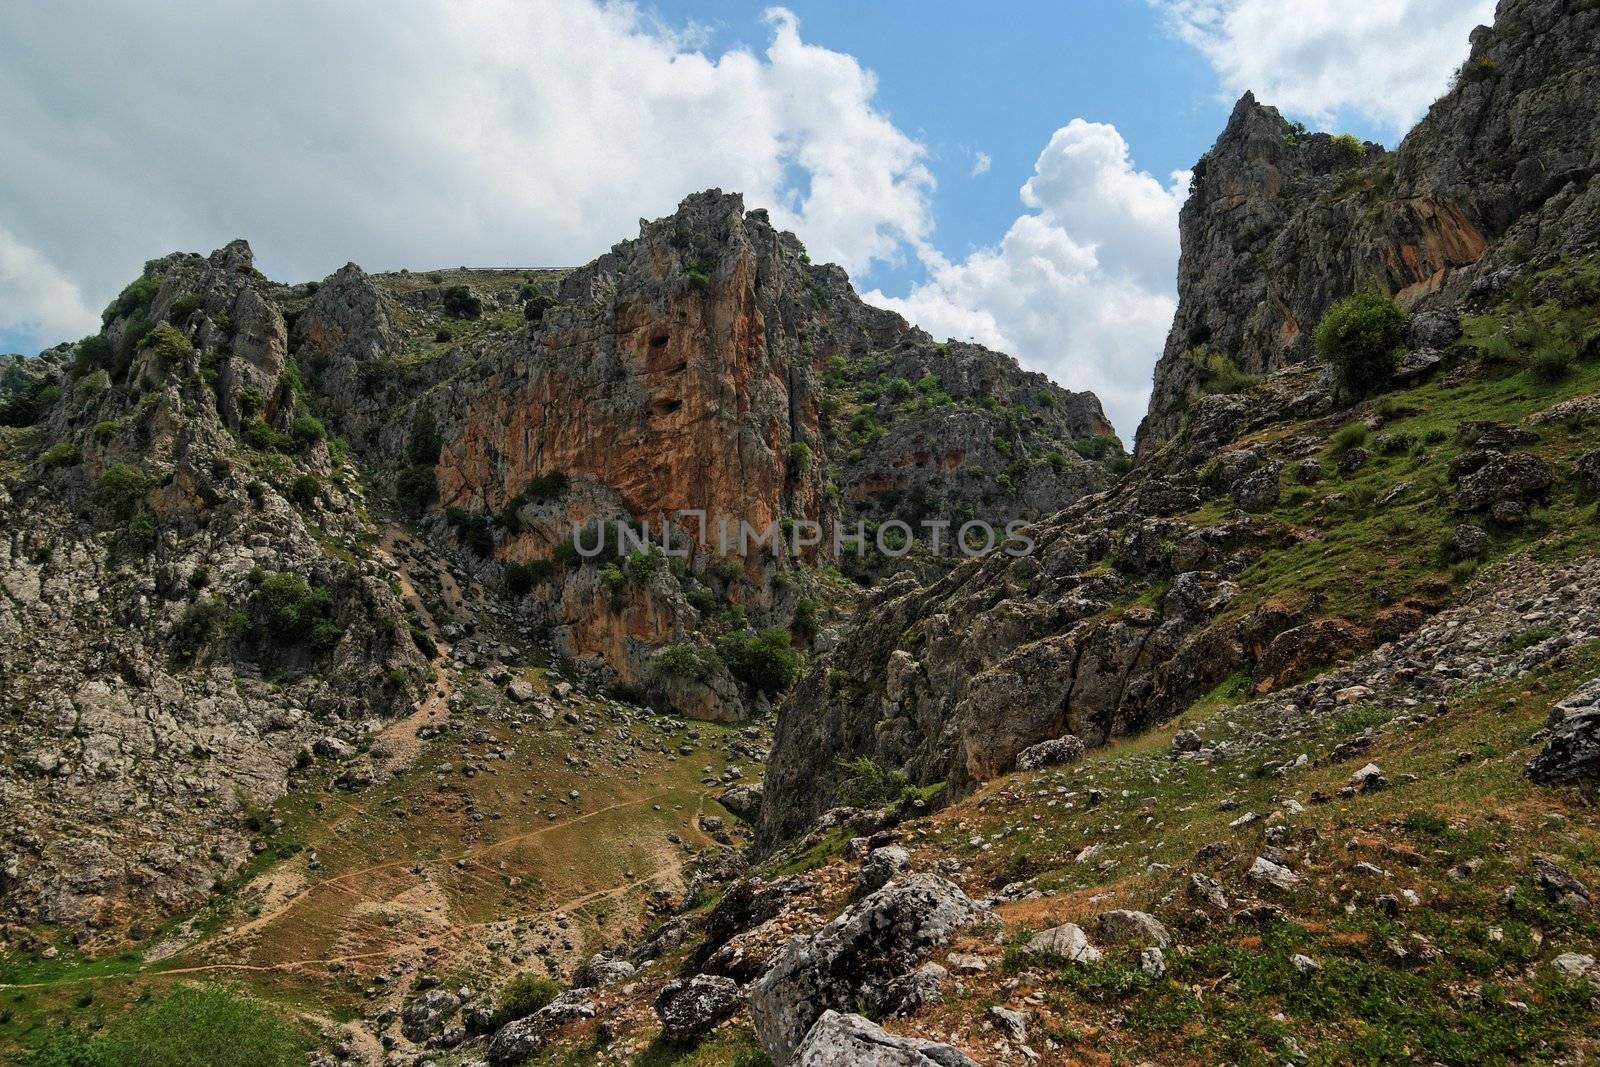 Rocky Mirador de Bailon gorge near Zuheros  in Spain on cloudy day